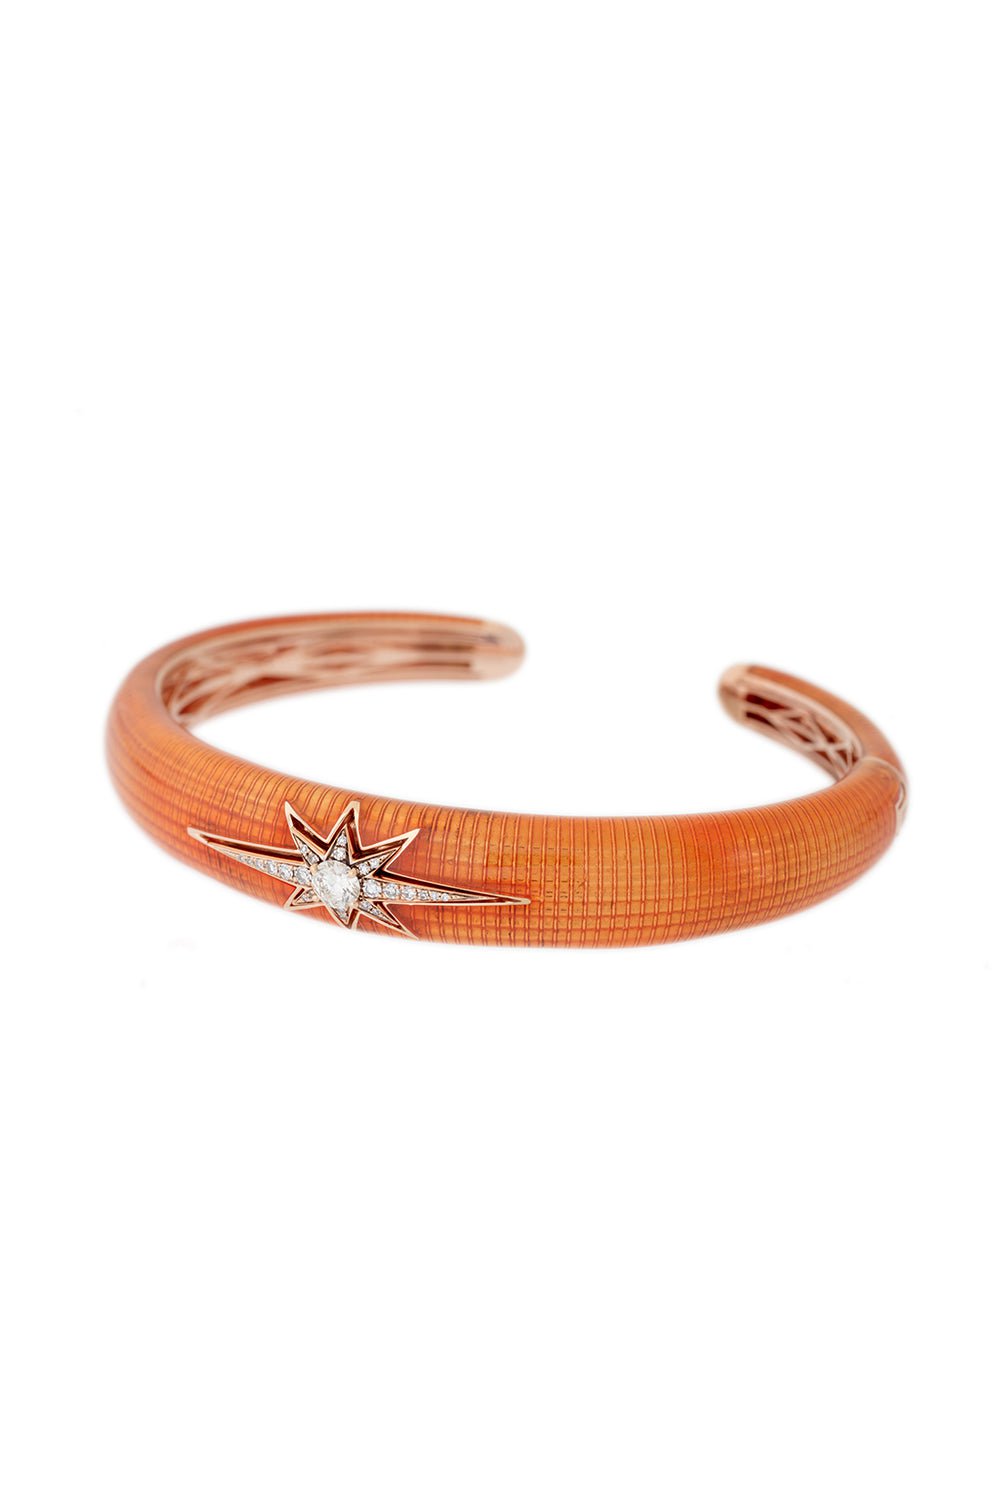 SELIM MOUZANNAR-Aida Orange Enamel Cuff Bracelet-ROSE GOLD